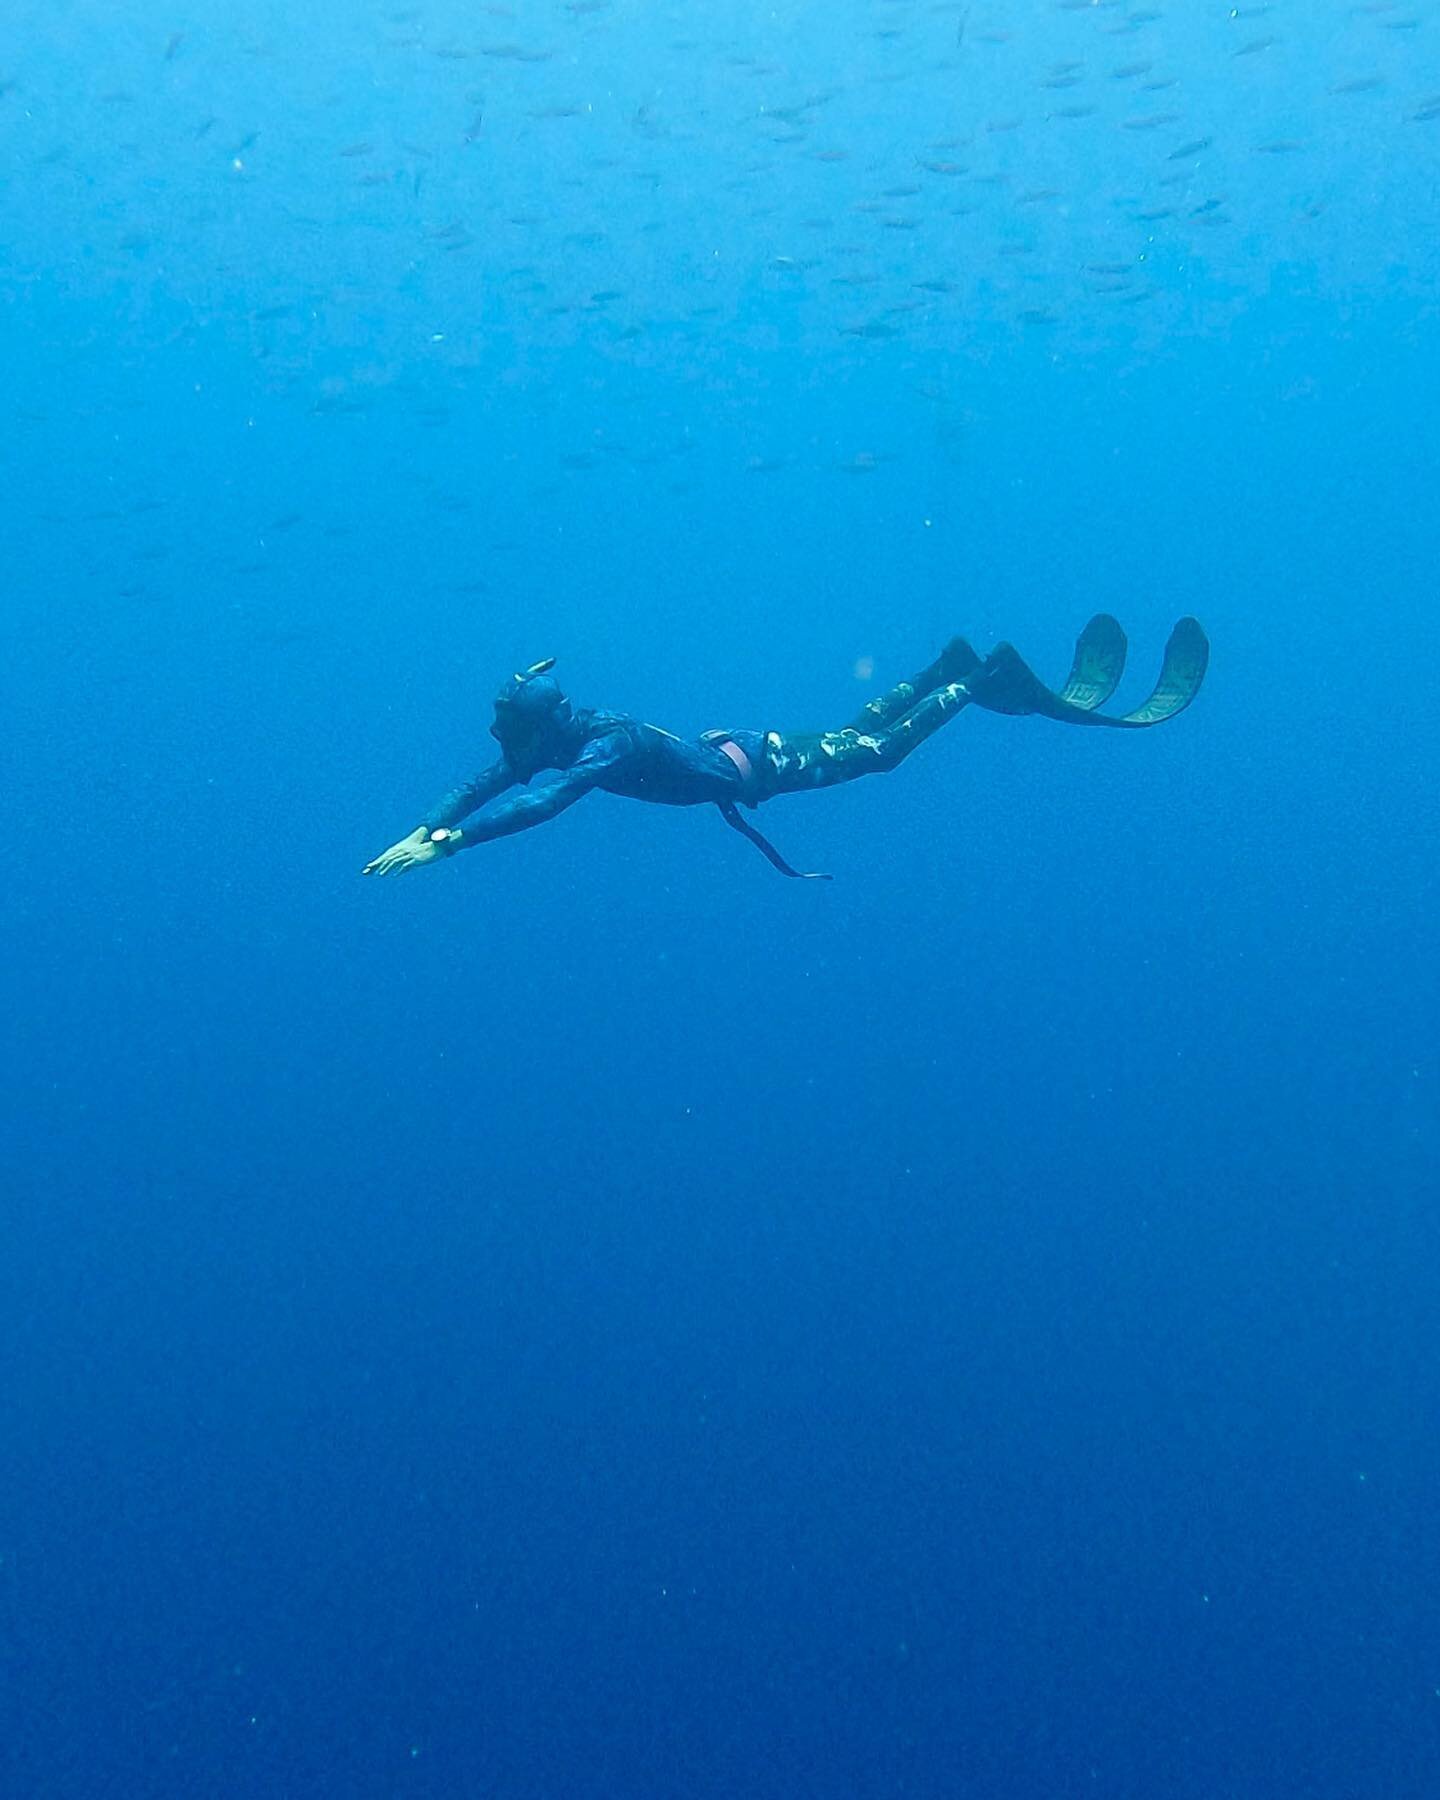 Diving into the weekend 🌊🤿🏝️

#freediving #ocean #holdyourbreath #divedeep #freedive #apnea #breathhold #freedivingcourse #keepcalm #mindfullness #travel #adventure #freediveinparadise #explore #underwater  #christmasisland #indianocean #vitaminse